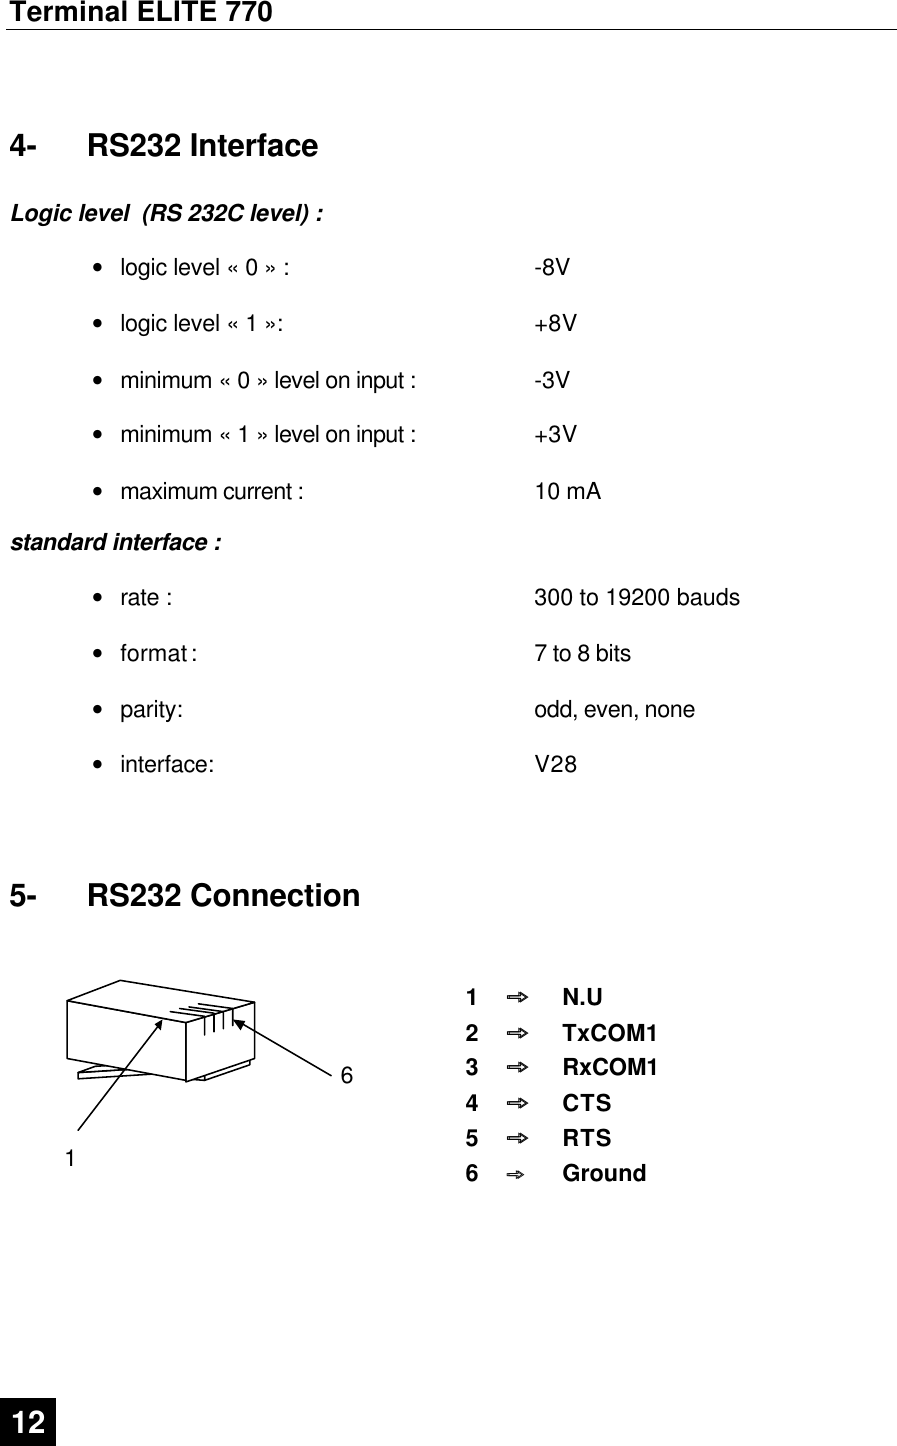 Terminal ELITE 770  12   4-  RS232 Interface  Logic level  (RS 232C level) :  • logic level « 0 » : -8V   • logic level « 1 »: +8V   • minimum « 0 » level on input : -3V   • minimum « 1 » level on input : +3V   • maximum current : 10 mA  standard interface :  • rate : 300 to 19200 bauds   • format :  7 to 8 bits   • parity: odd, even, none   • interface: V28   5-  RS232 Connection    6   1 1  þþ  N.U 2  þþ  TxCOM1 3  þþ  RxCOM1 4  þþ  CTS 5  þþ  RTS 6  þþ  Ground   